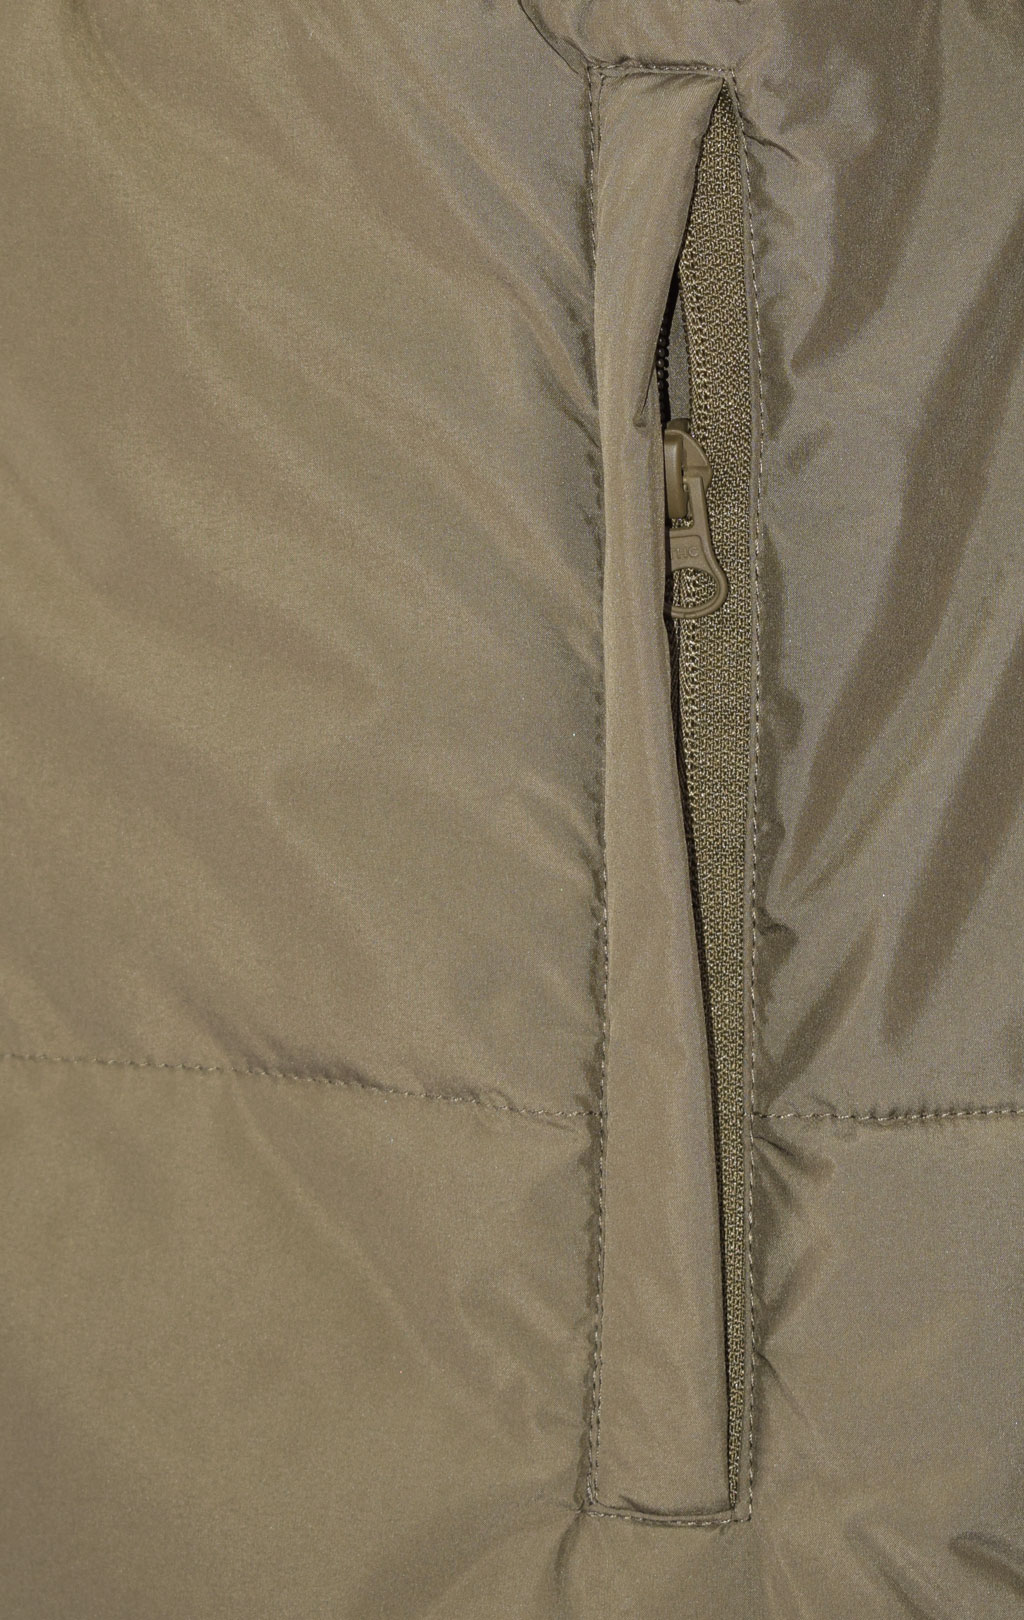 Куртка Pentagon TAURUS утеплённая с капюшоном 06E ral 7013 08050 